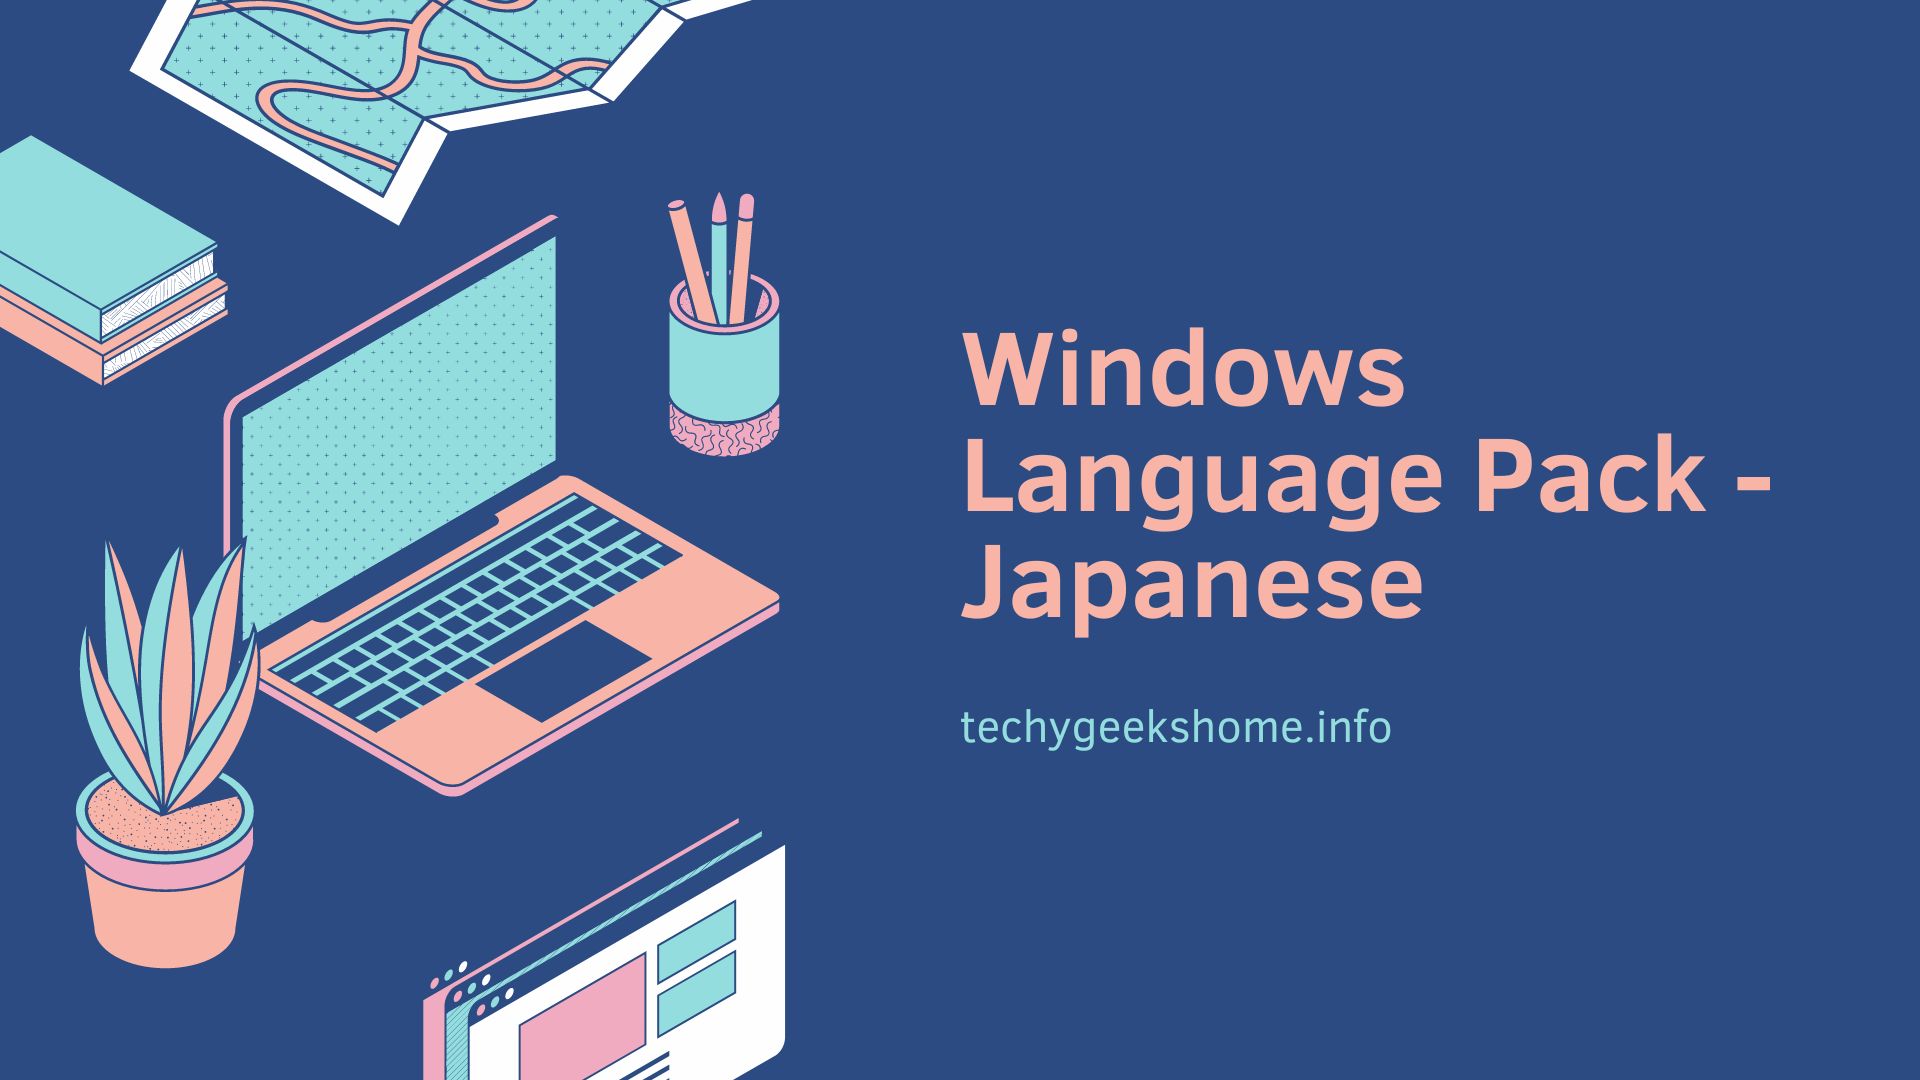 Windows 10 Language Pack - Japanese